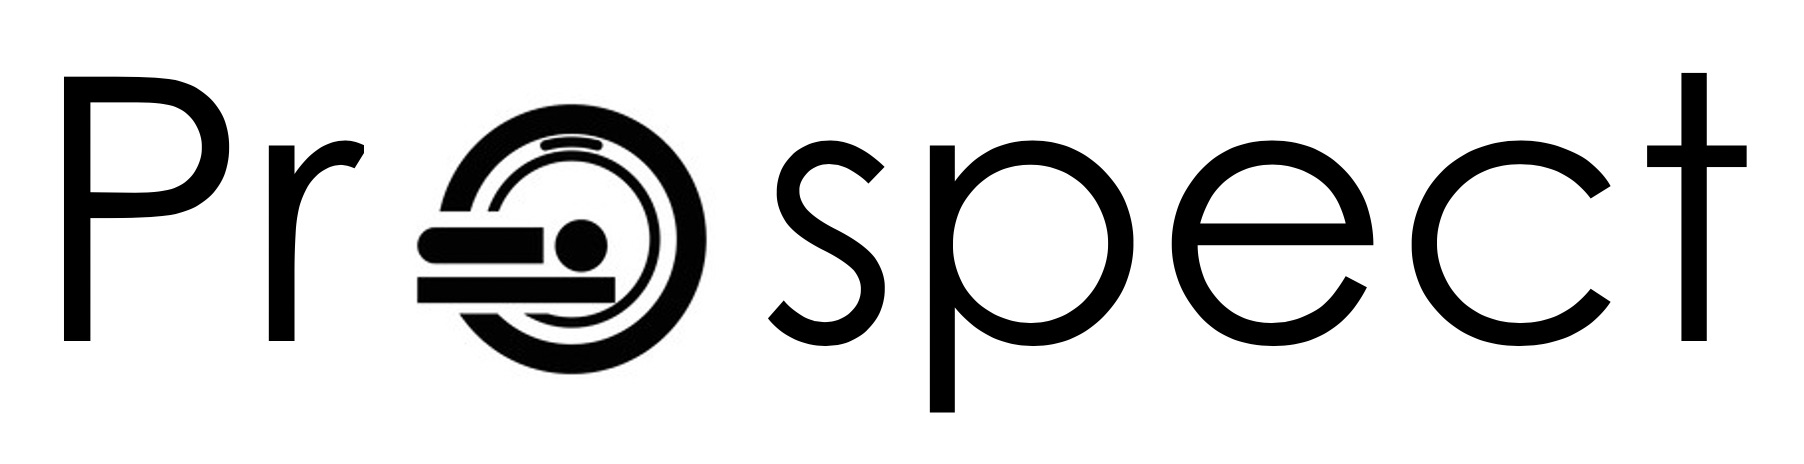 prospect project logo